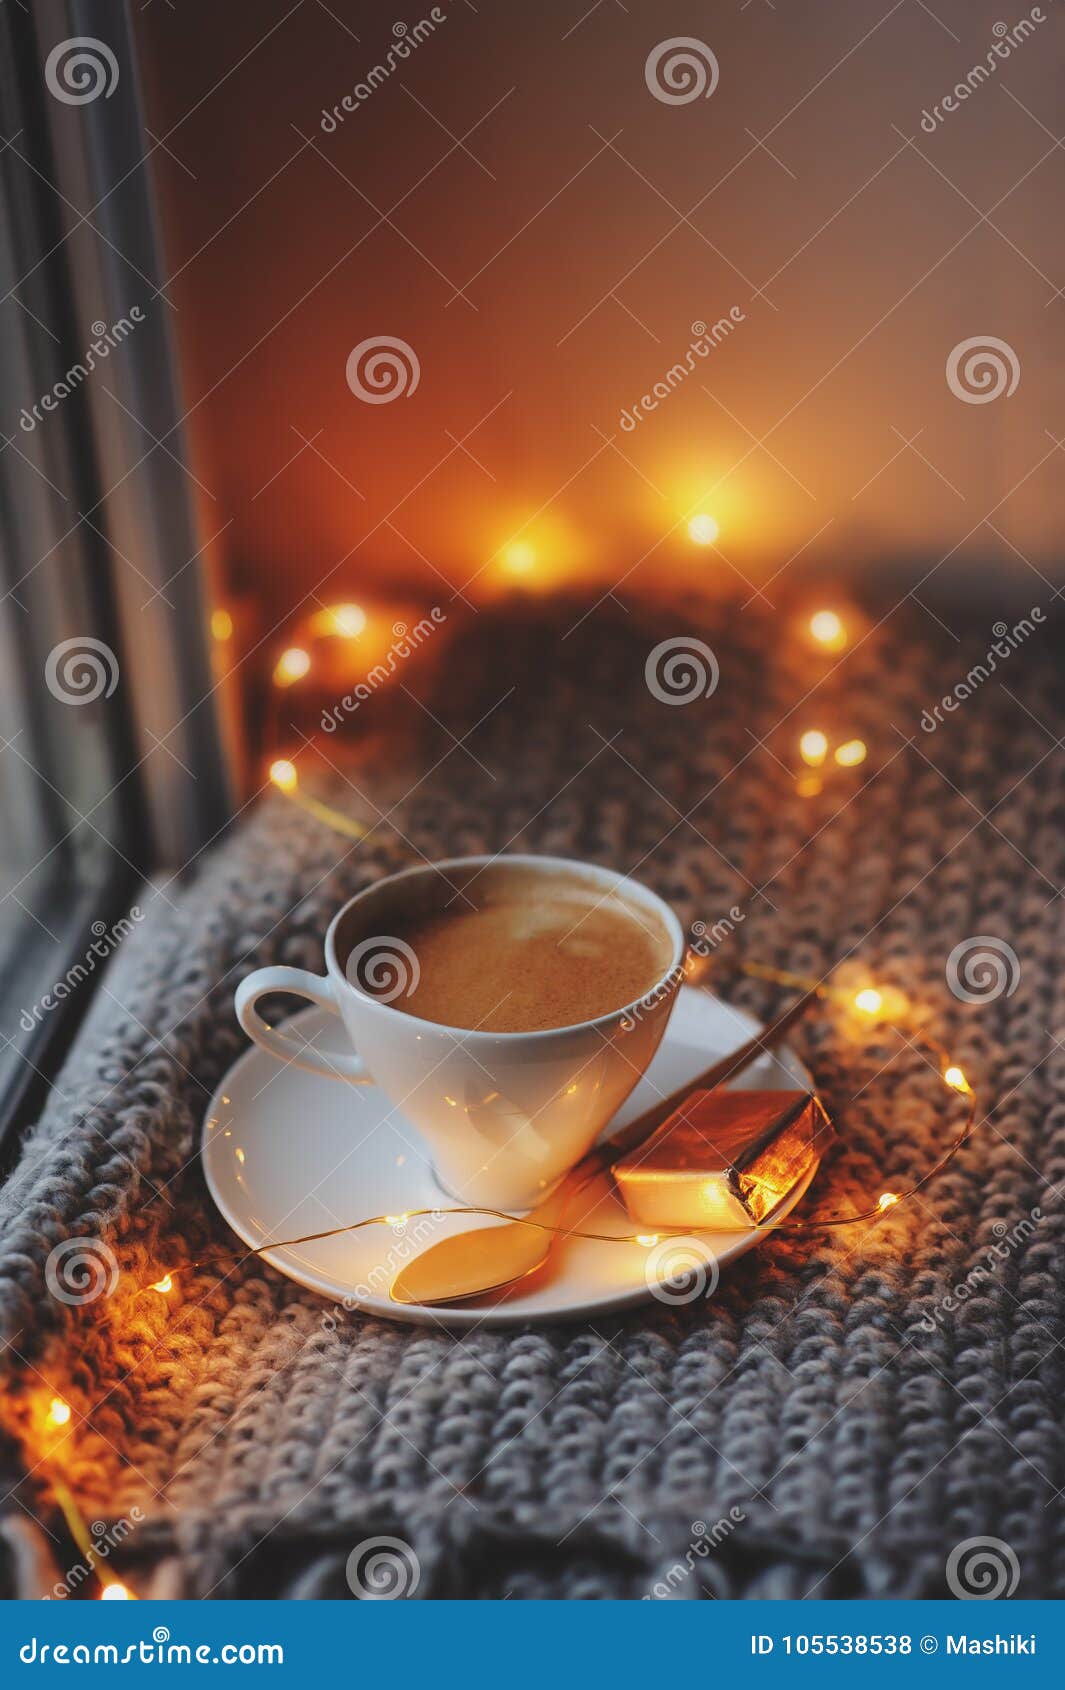 My Winter Morning Coffee Ritual: Preheat the Mug to Keep Coffee Hot